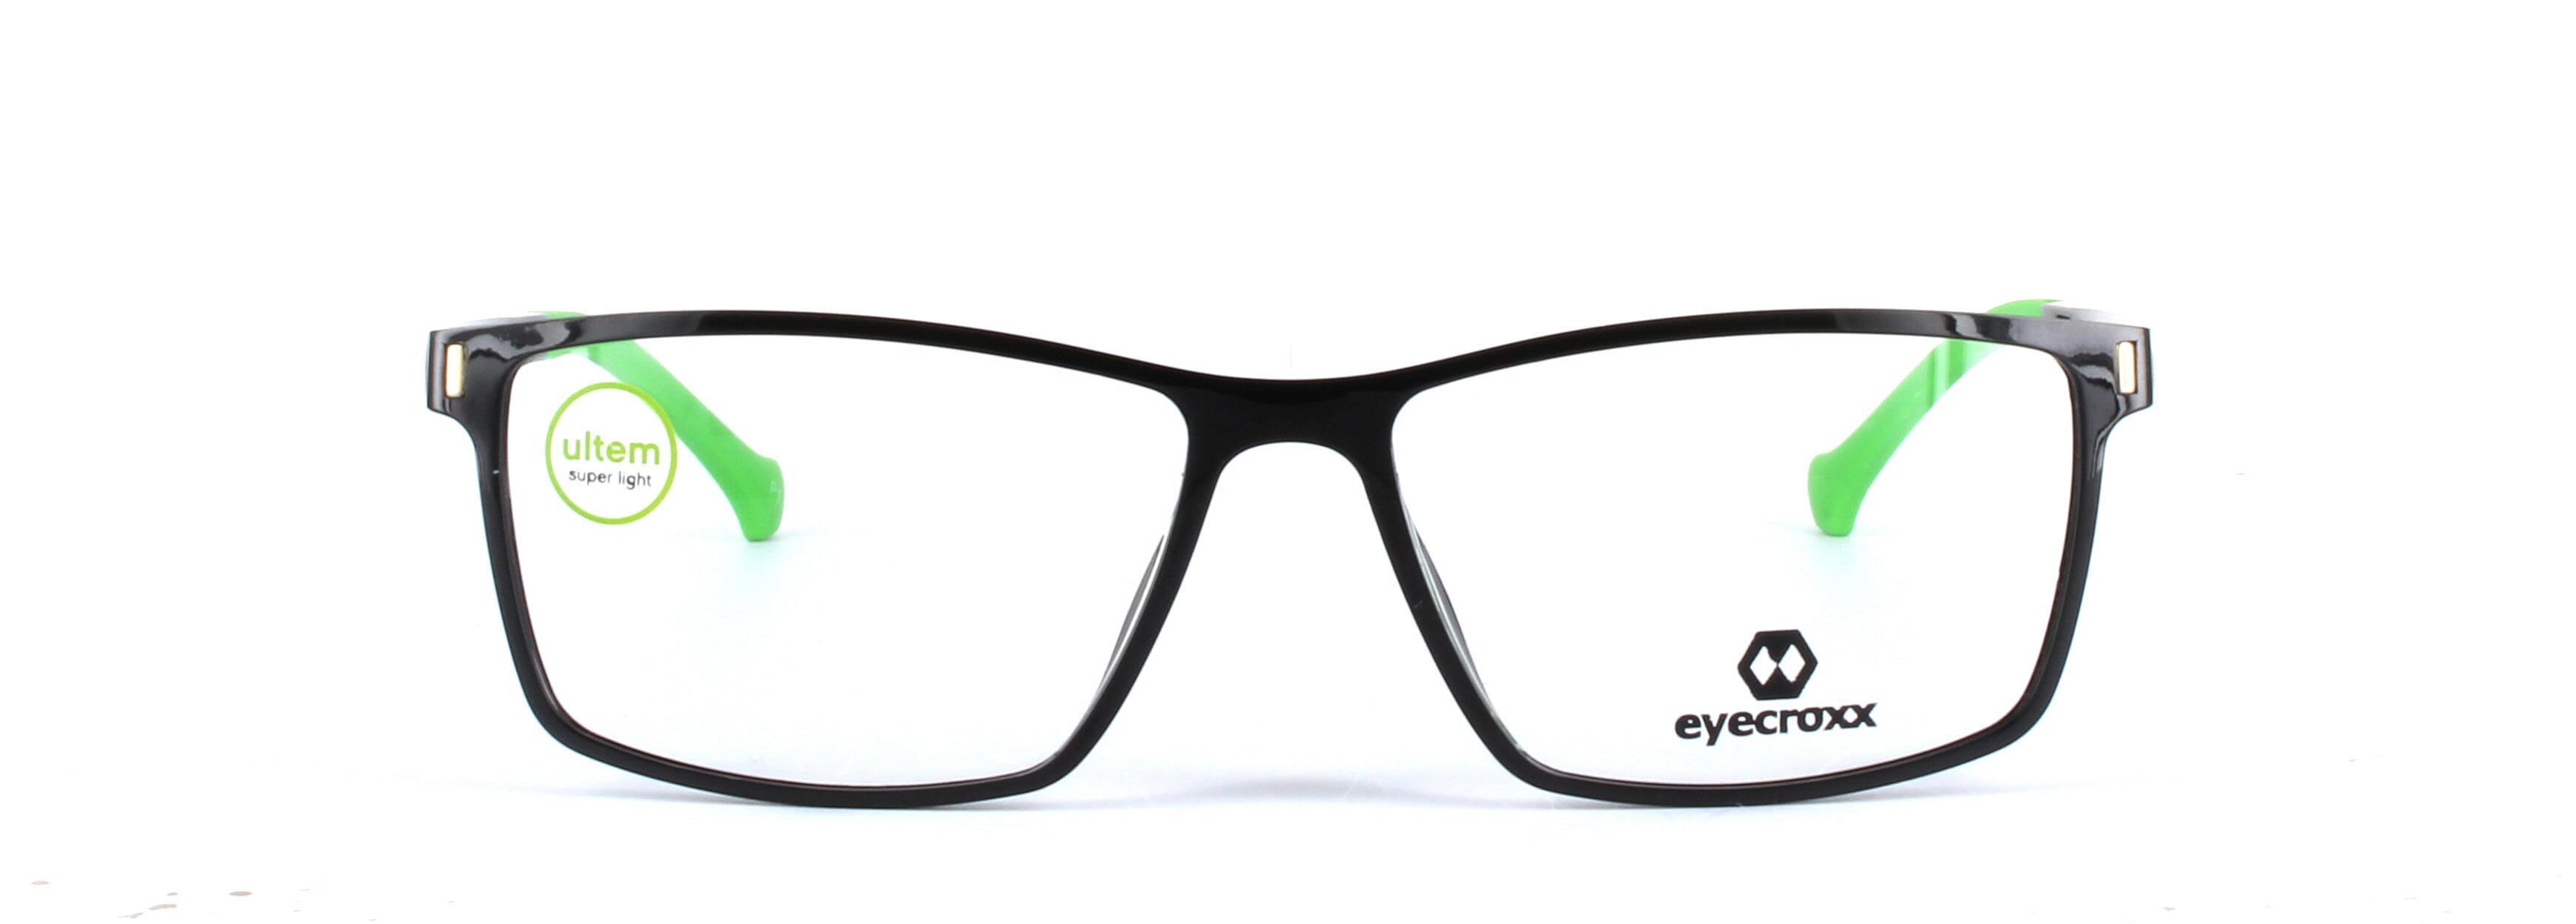 Eyecroxx 587 Black and Green Full Rim Rectangular Plastic Glasses - Image View 5